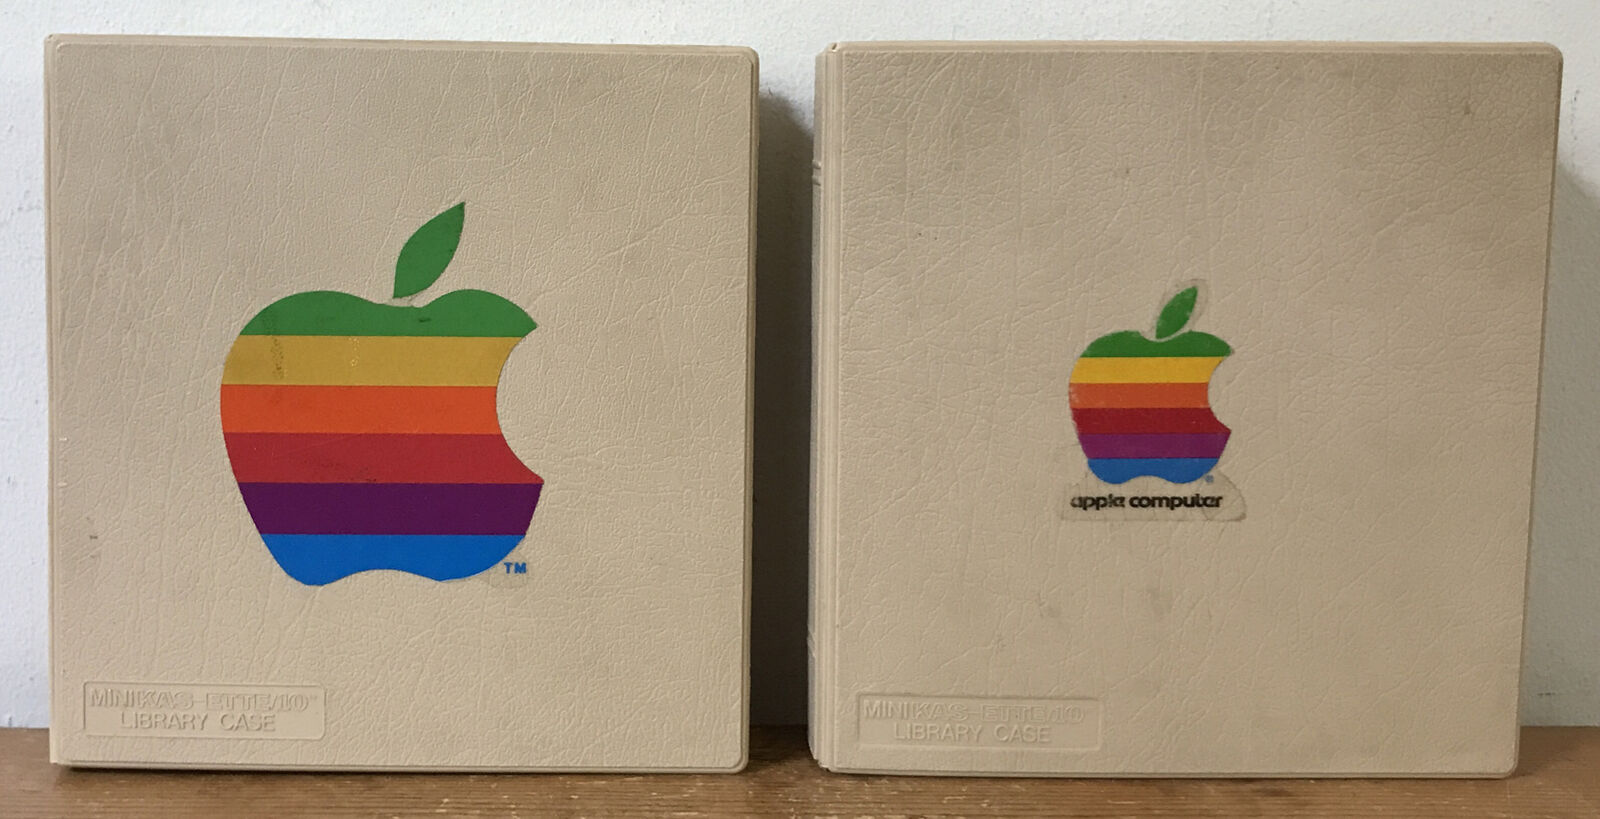 Vtg MiniKas-ette 10 Library Case Apple Stickers Floppy Disk Holders Organizers